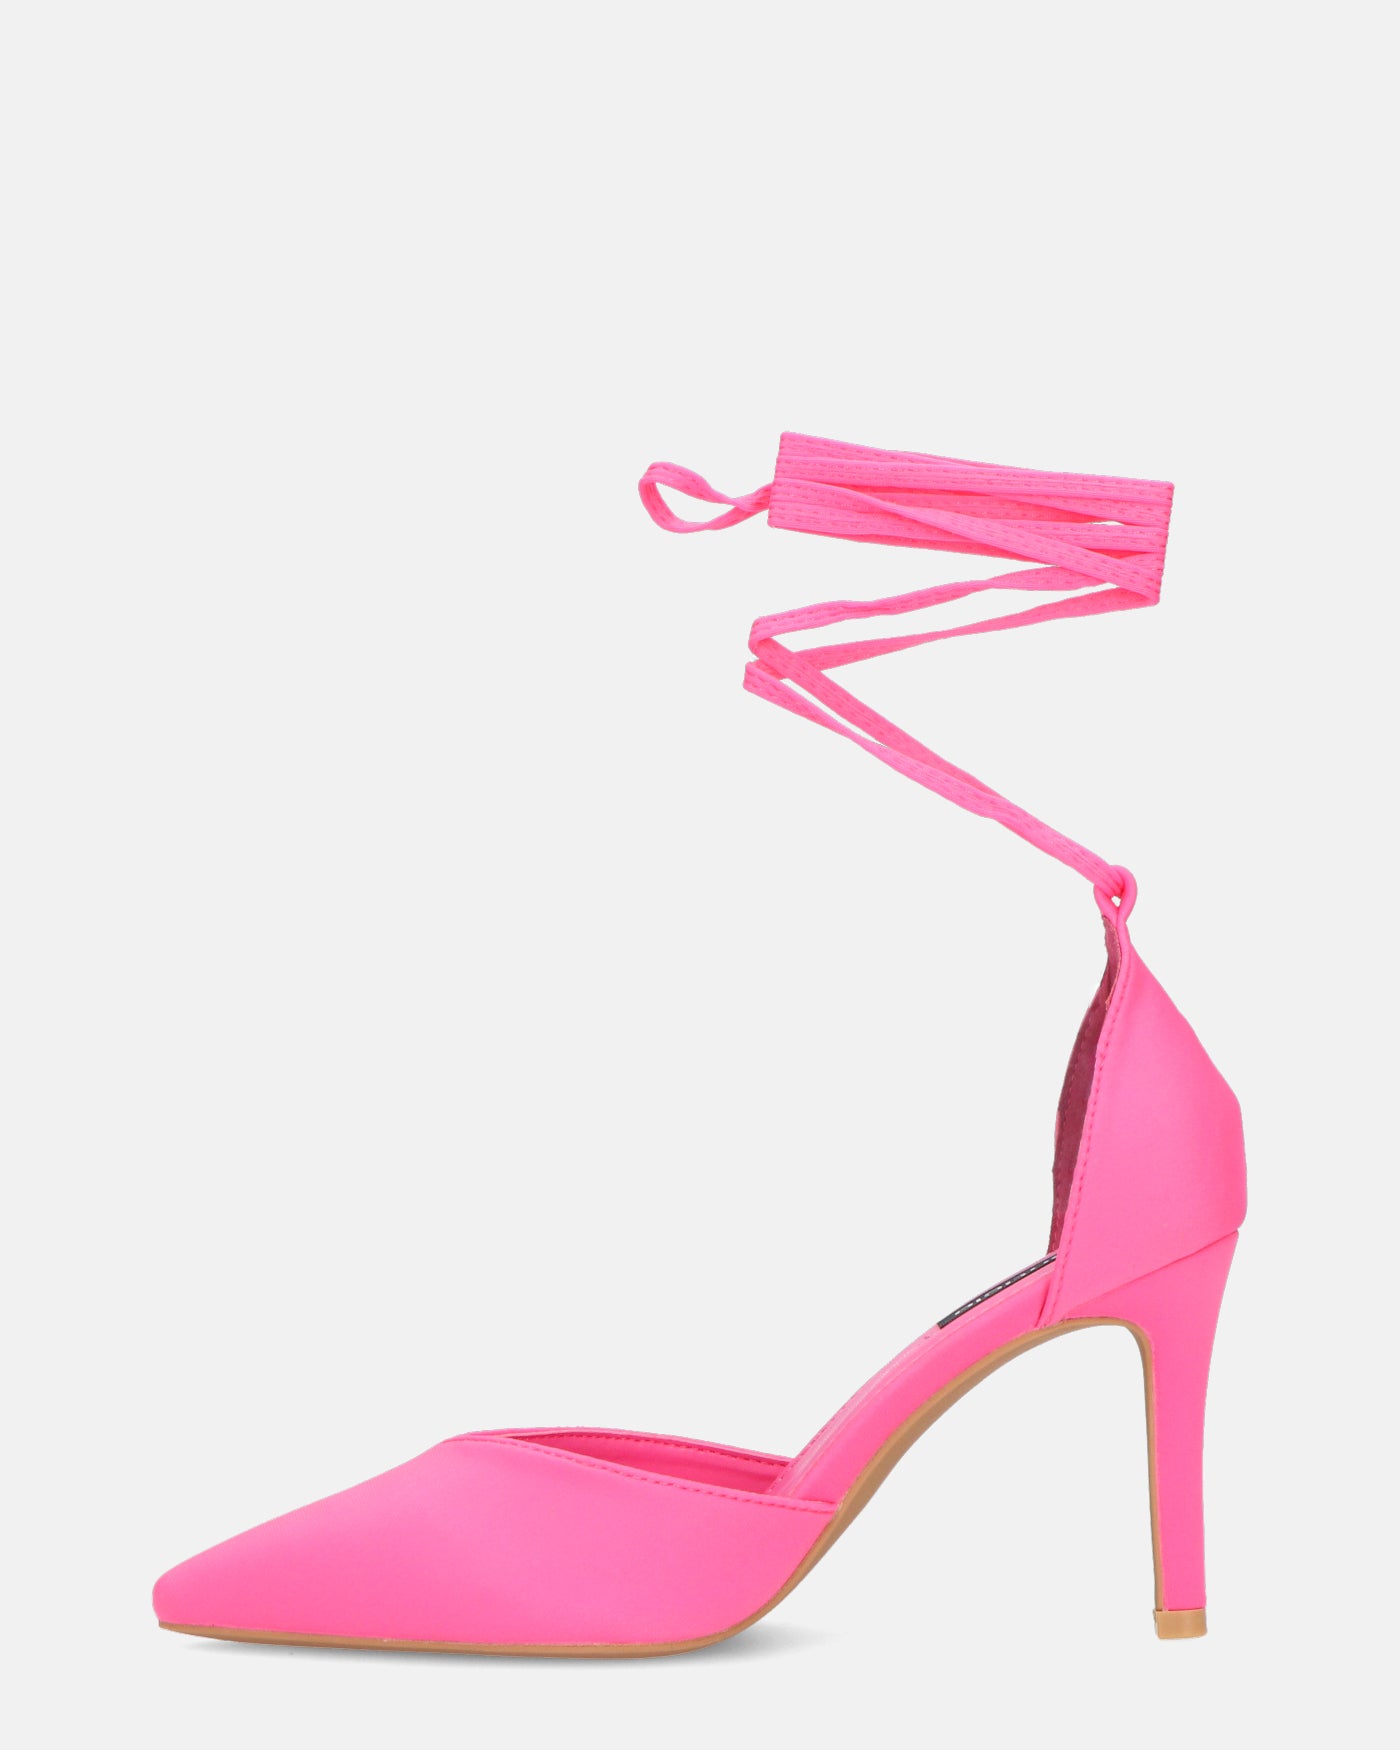 MAURA - pointed stiletto heels in fuchsia lycra